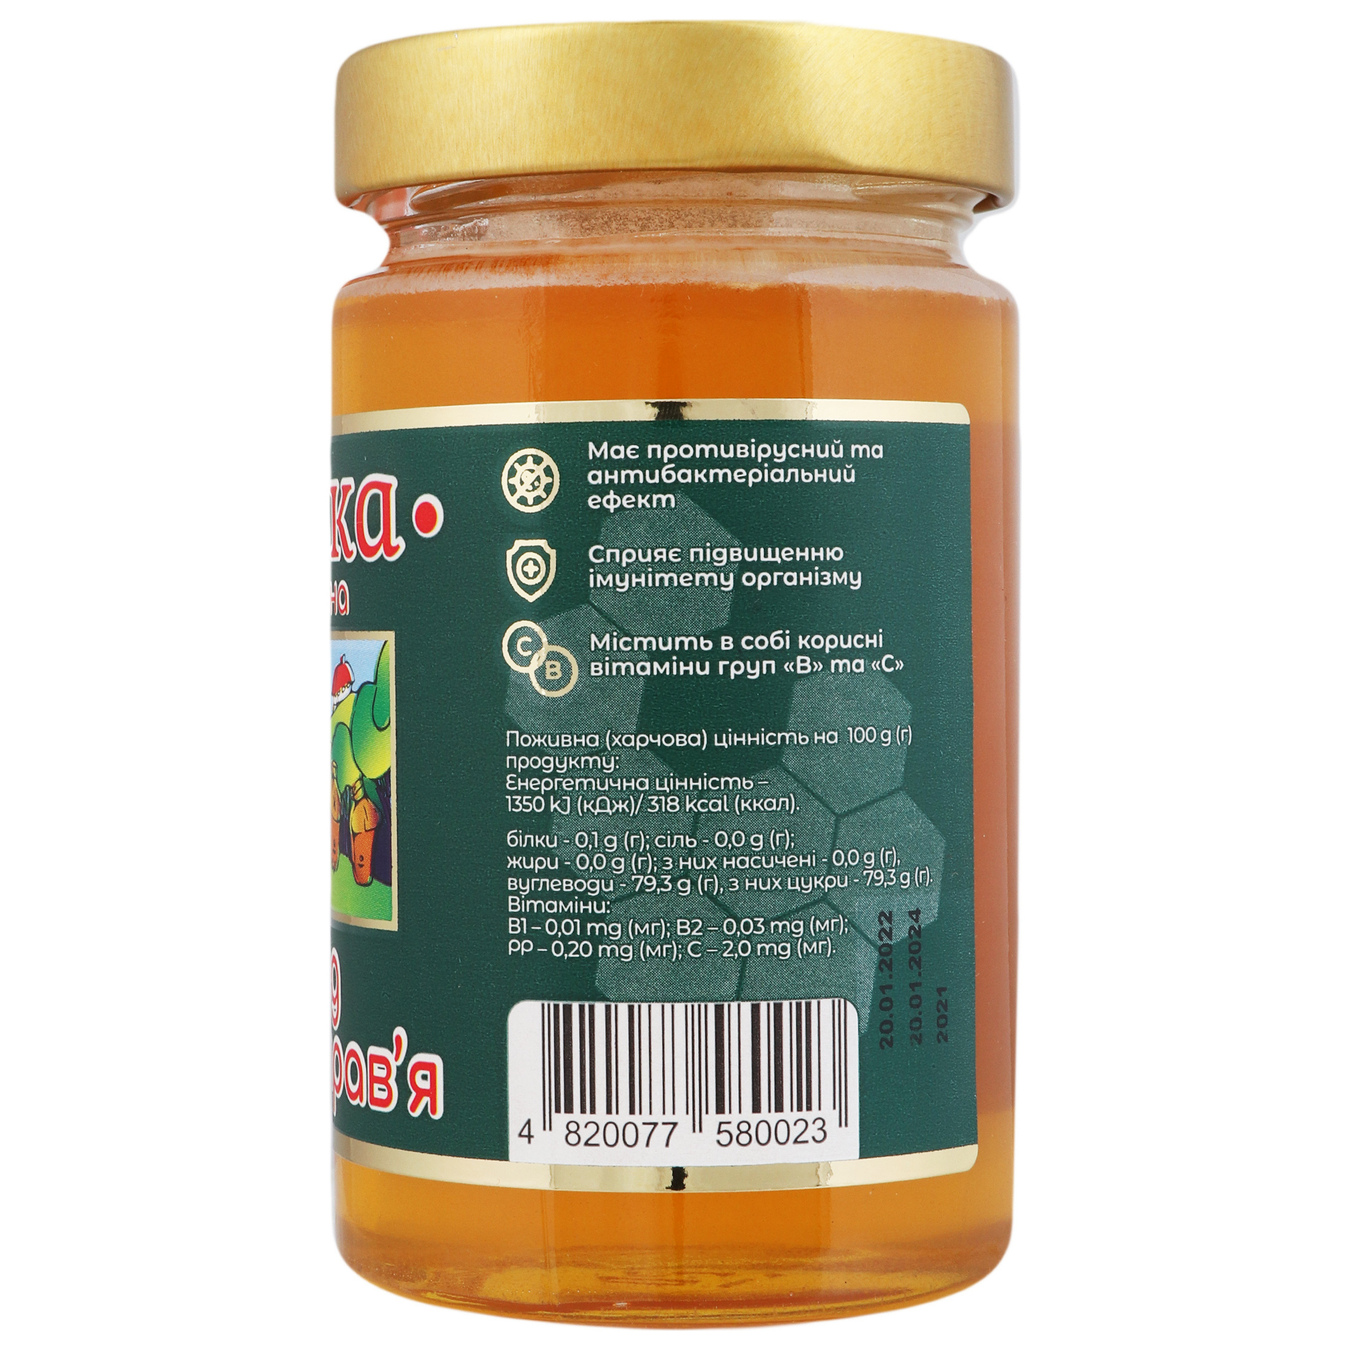 Apiary natural multi-herb honey Apiary glass jar 400g 2